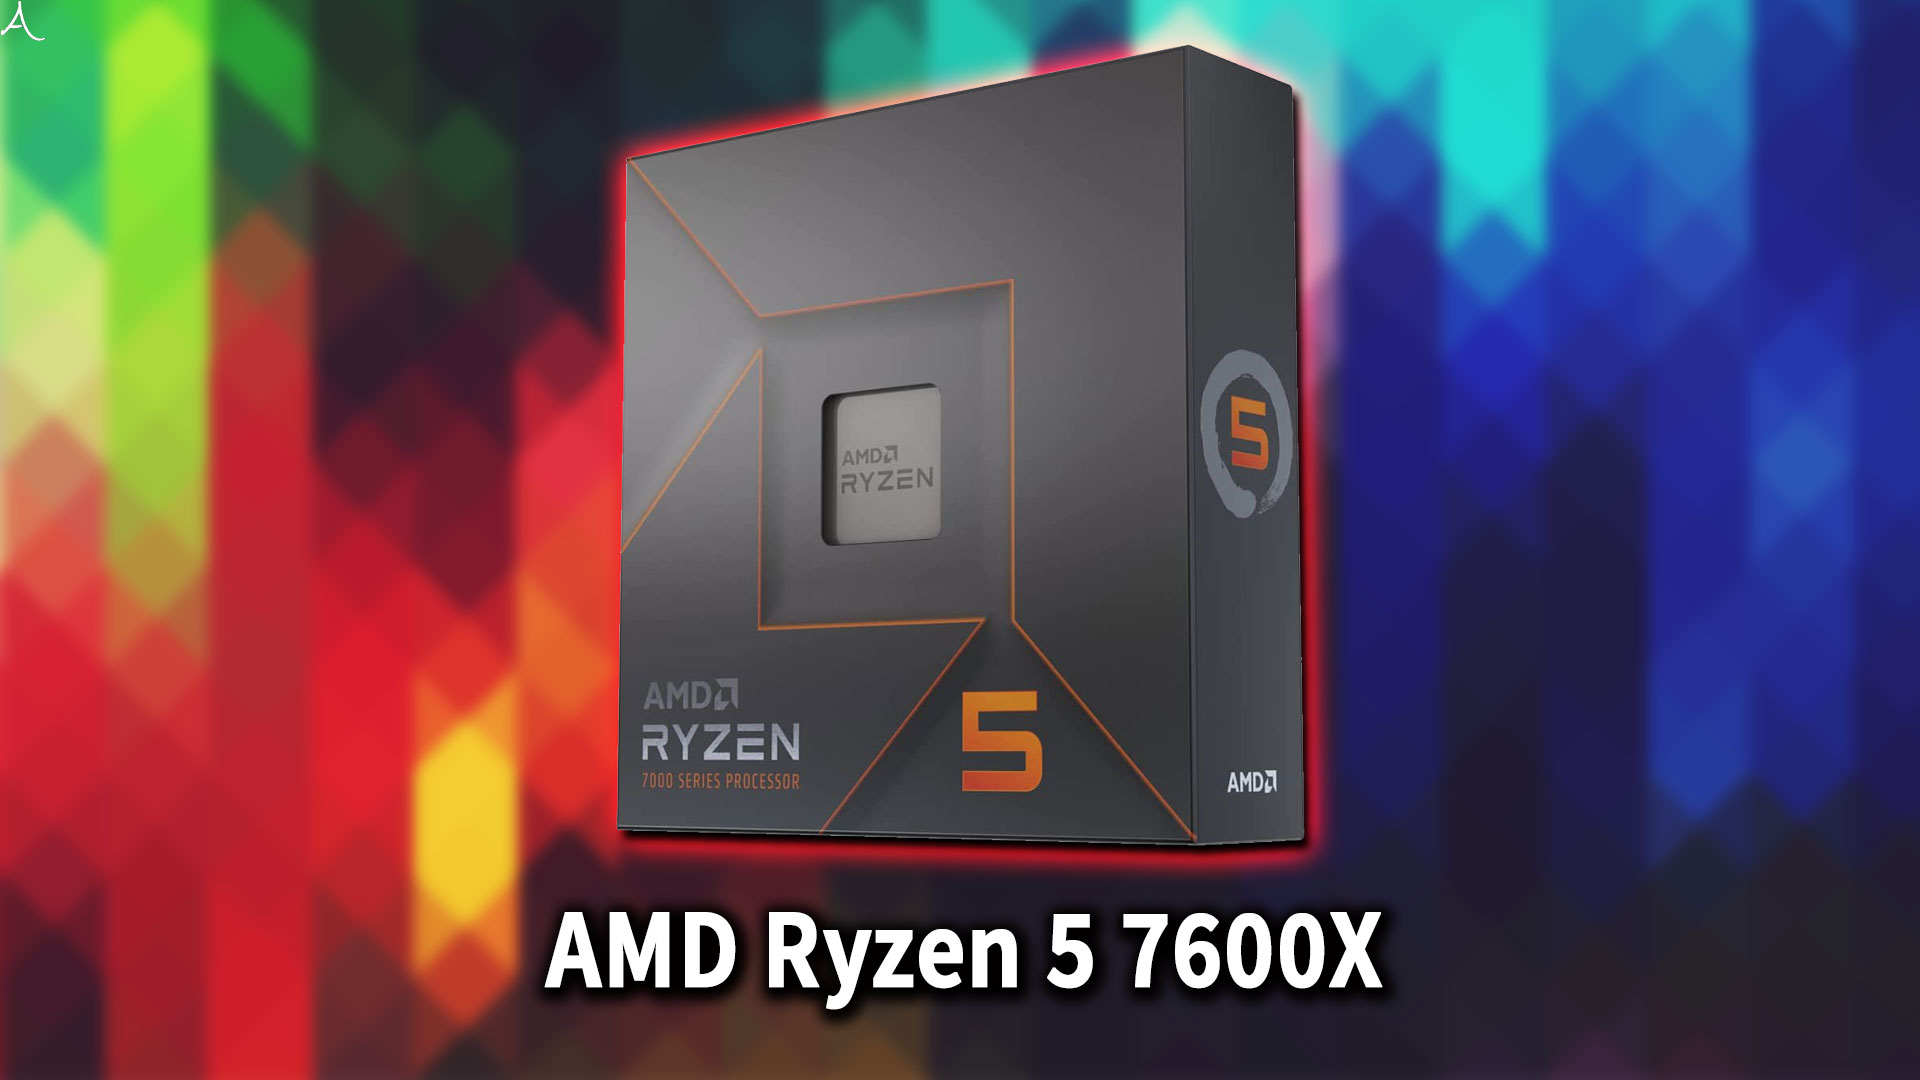 ｢Ryzen 5 7600X｣の消費電力は？おすすめの電源容量はどれくらい？